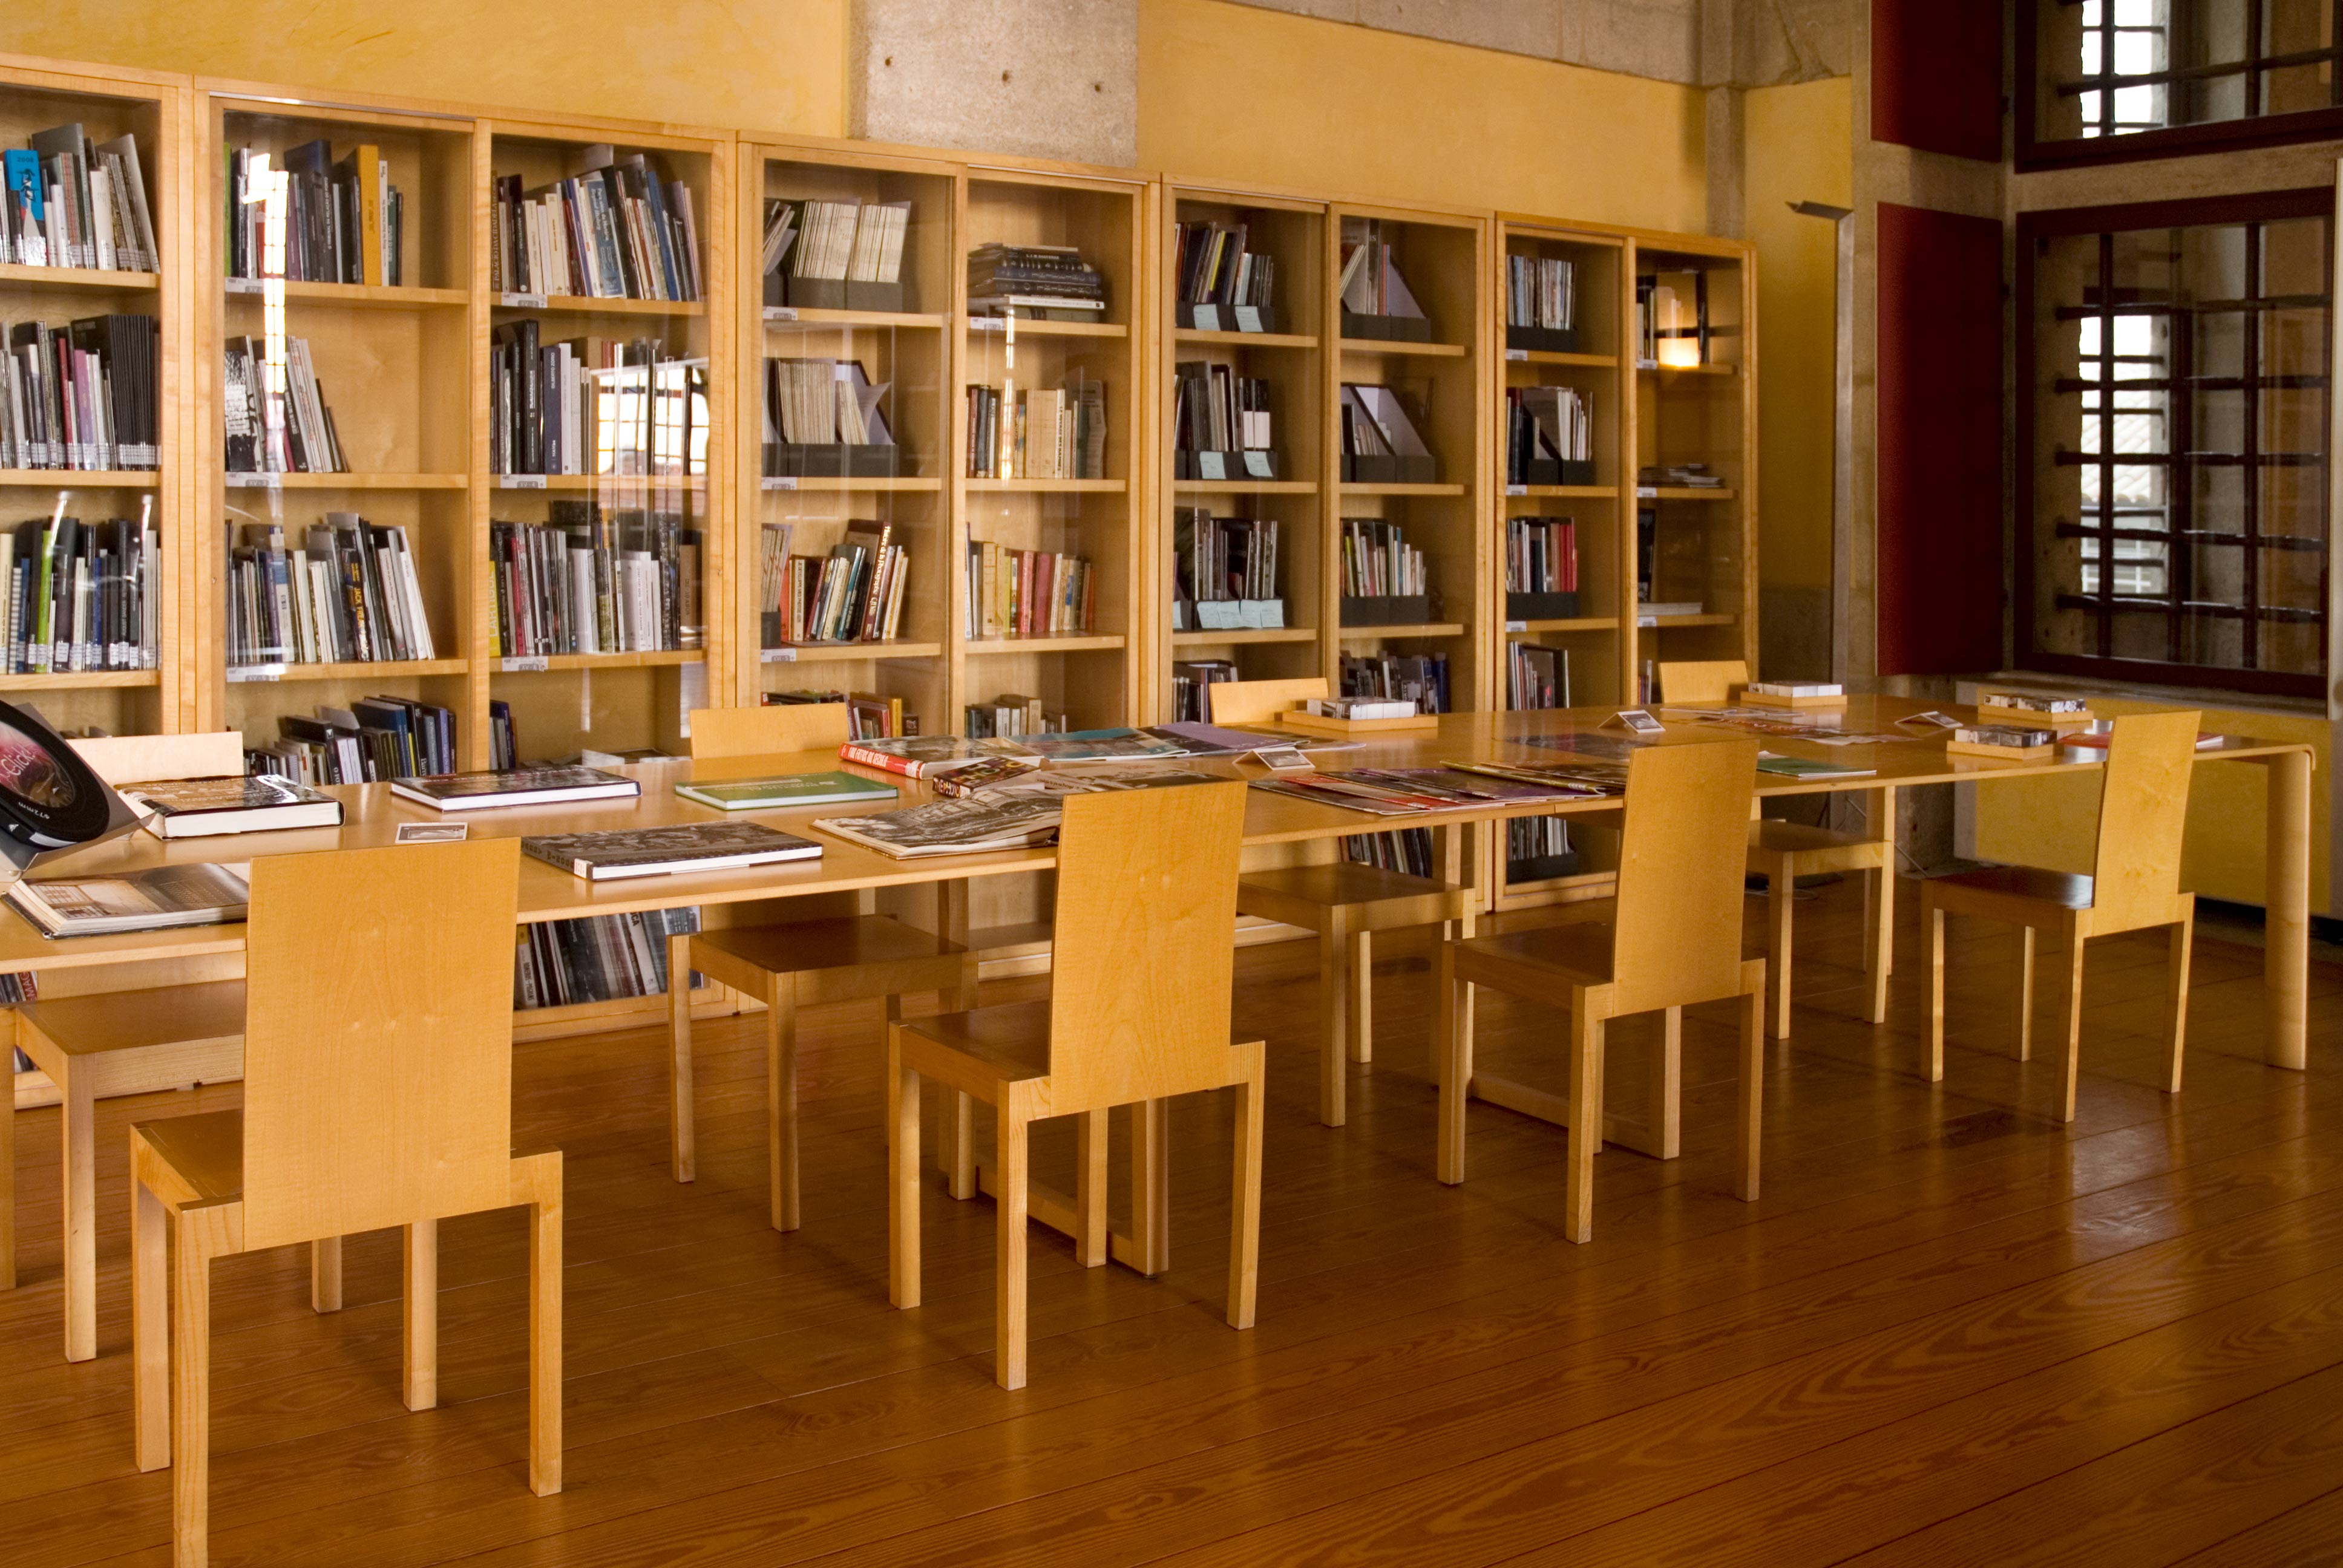 Centro Português de Fotografia - Libraries, archives and documentation centres